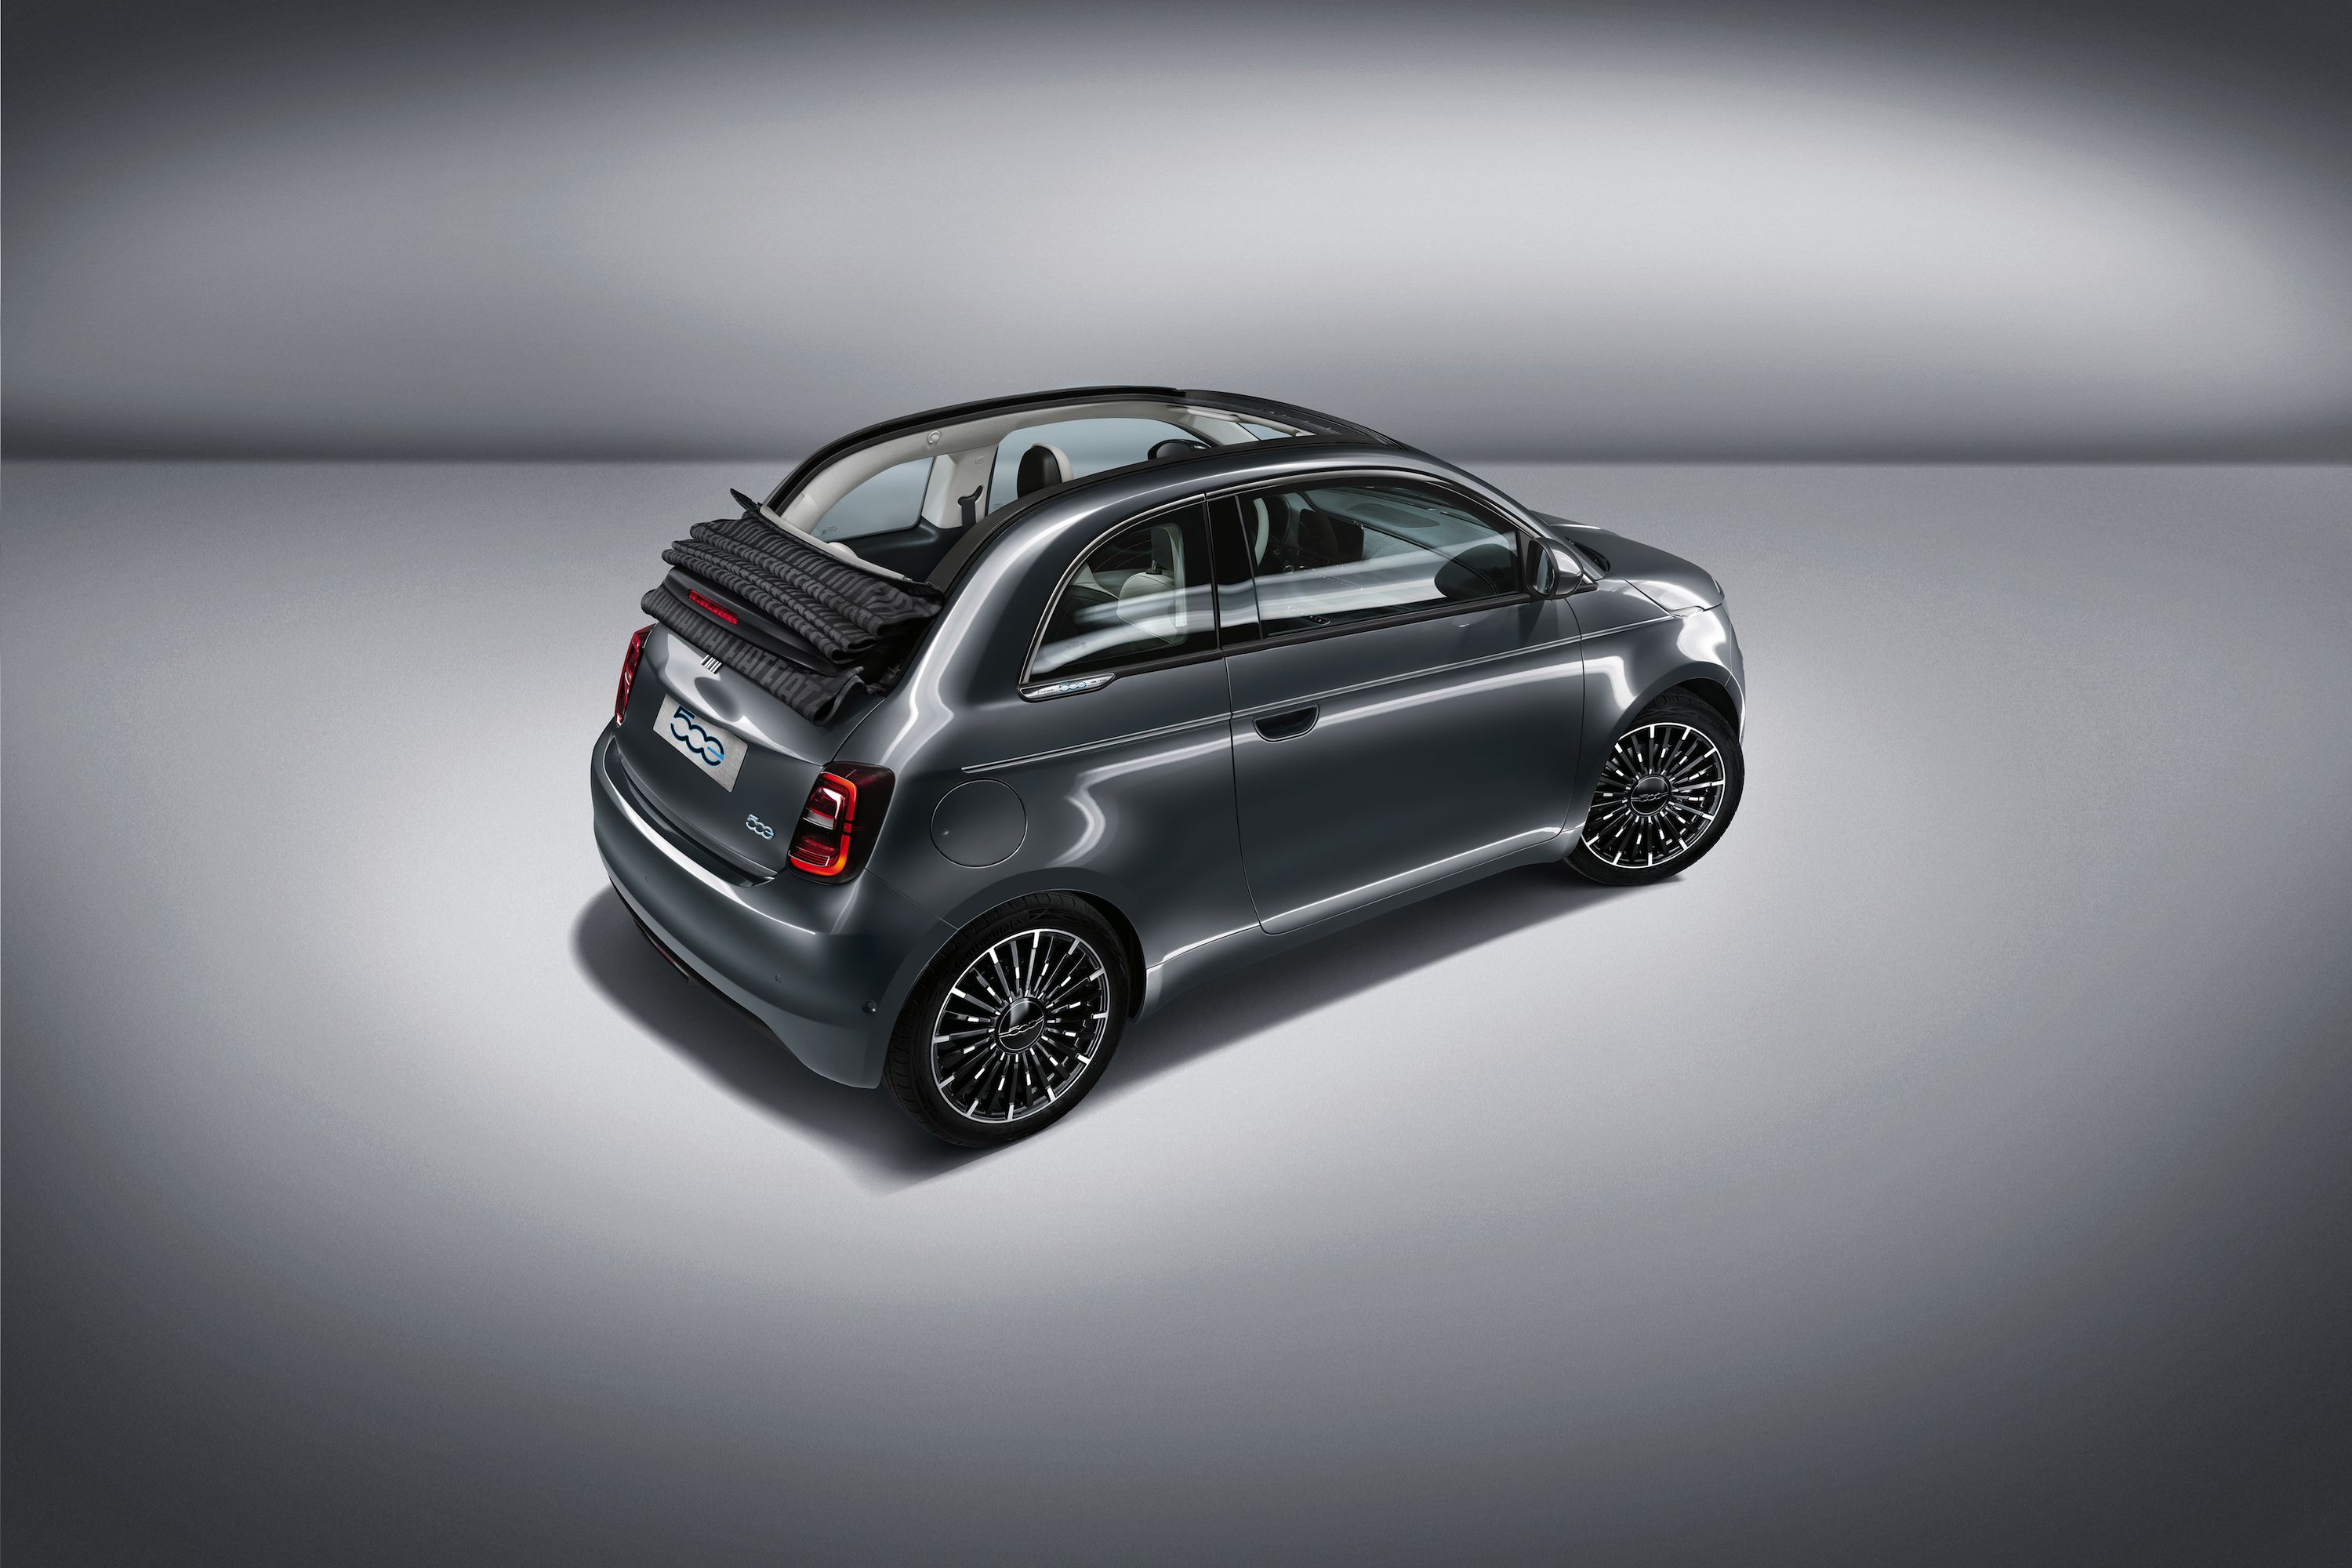 Wens knoop Voorzichtig 2021 Fiat 500 Electric City Car Revealed - New Fiat EV Hatchback